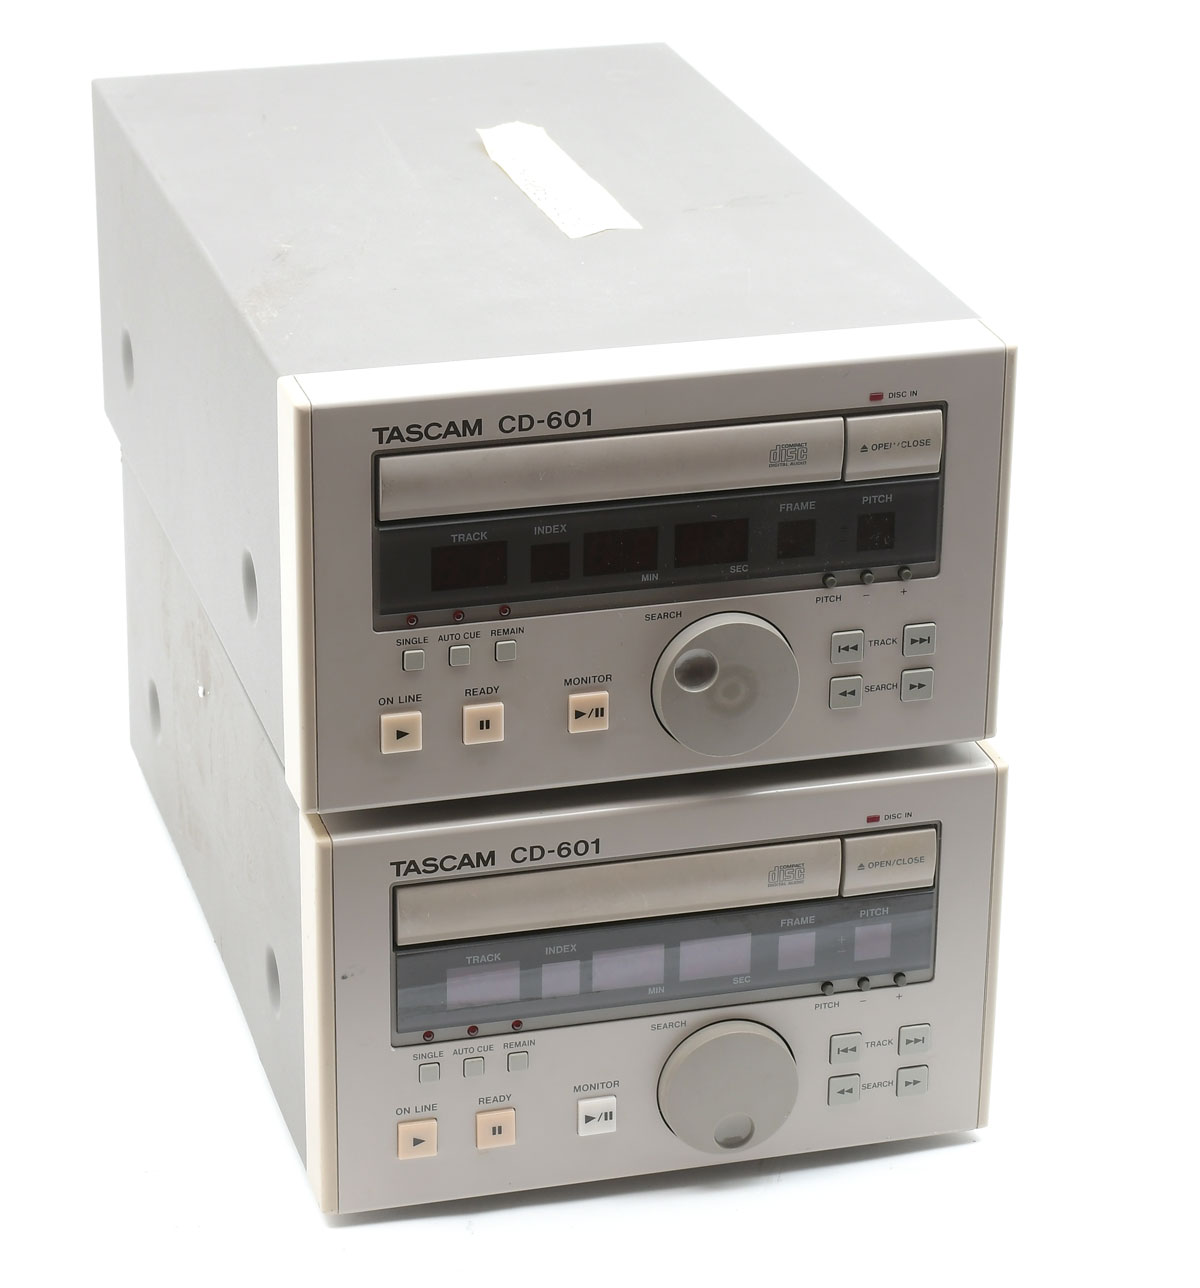 2 TASCAM CD-601 STUDIO COMPACT